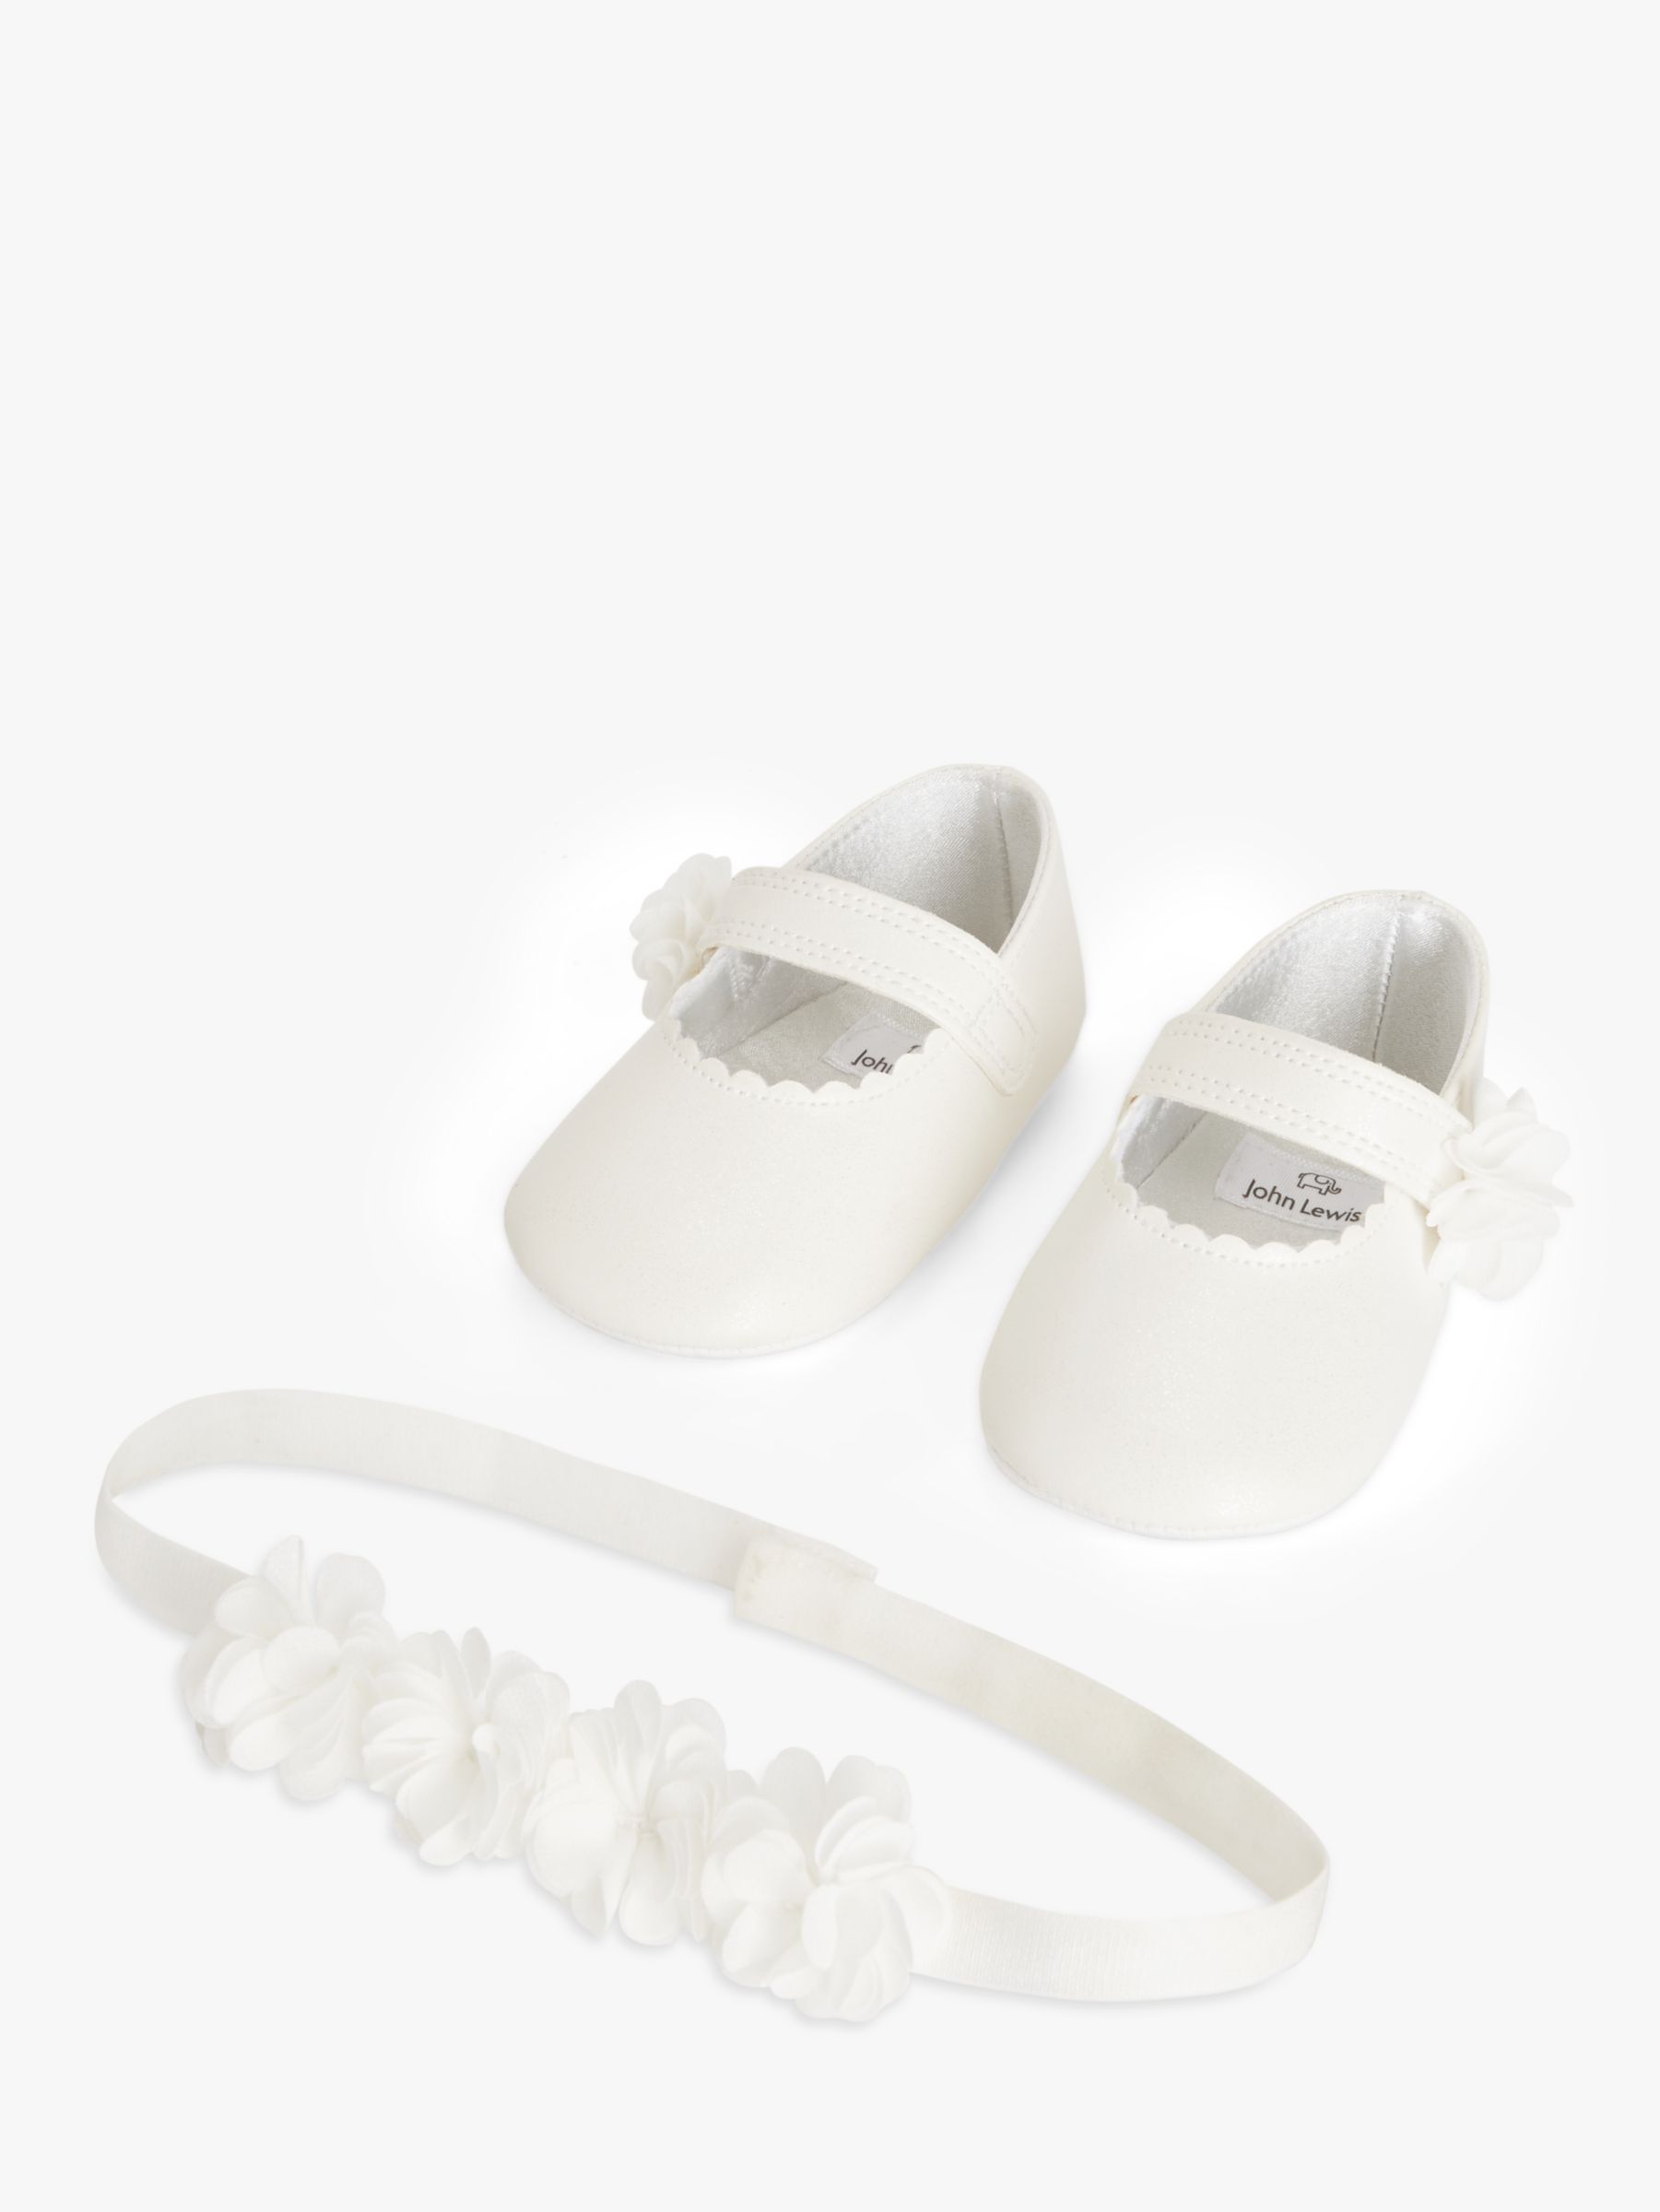 John Lewis Baby Christening Shoes and Headband Set at John Lewis & Partners